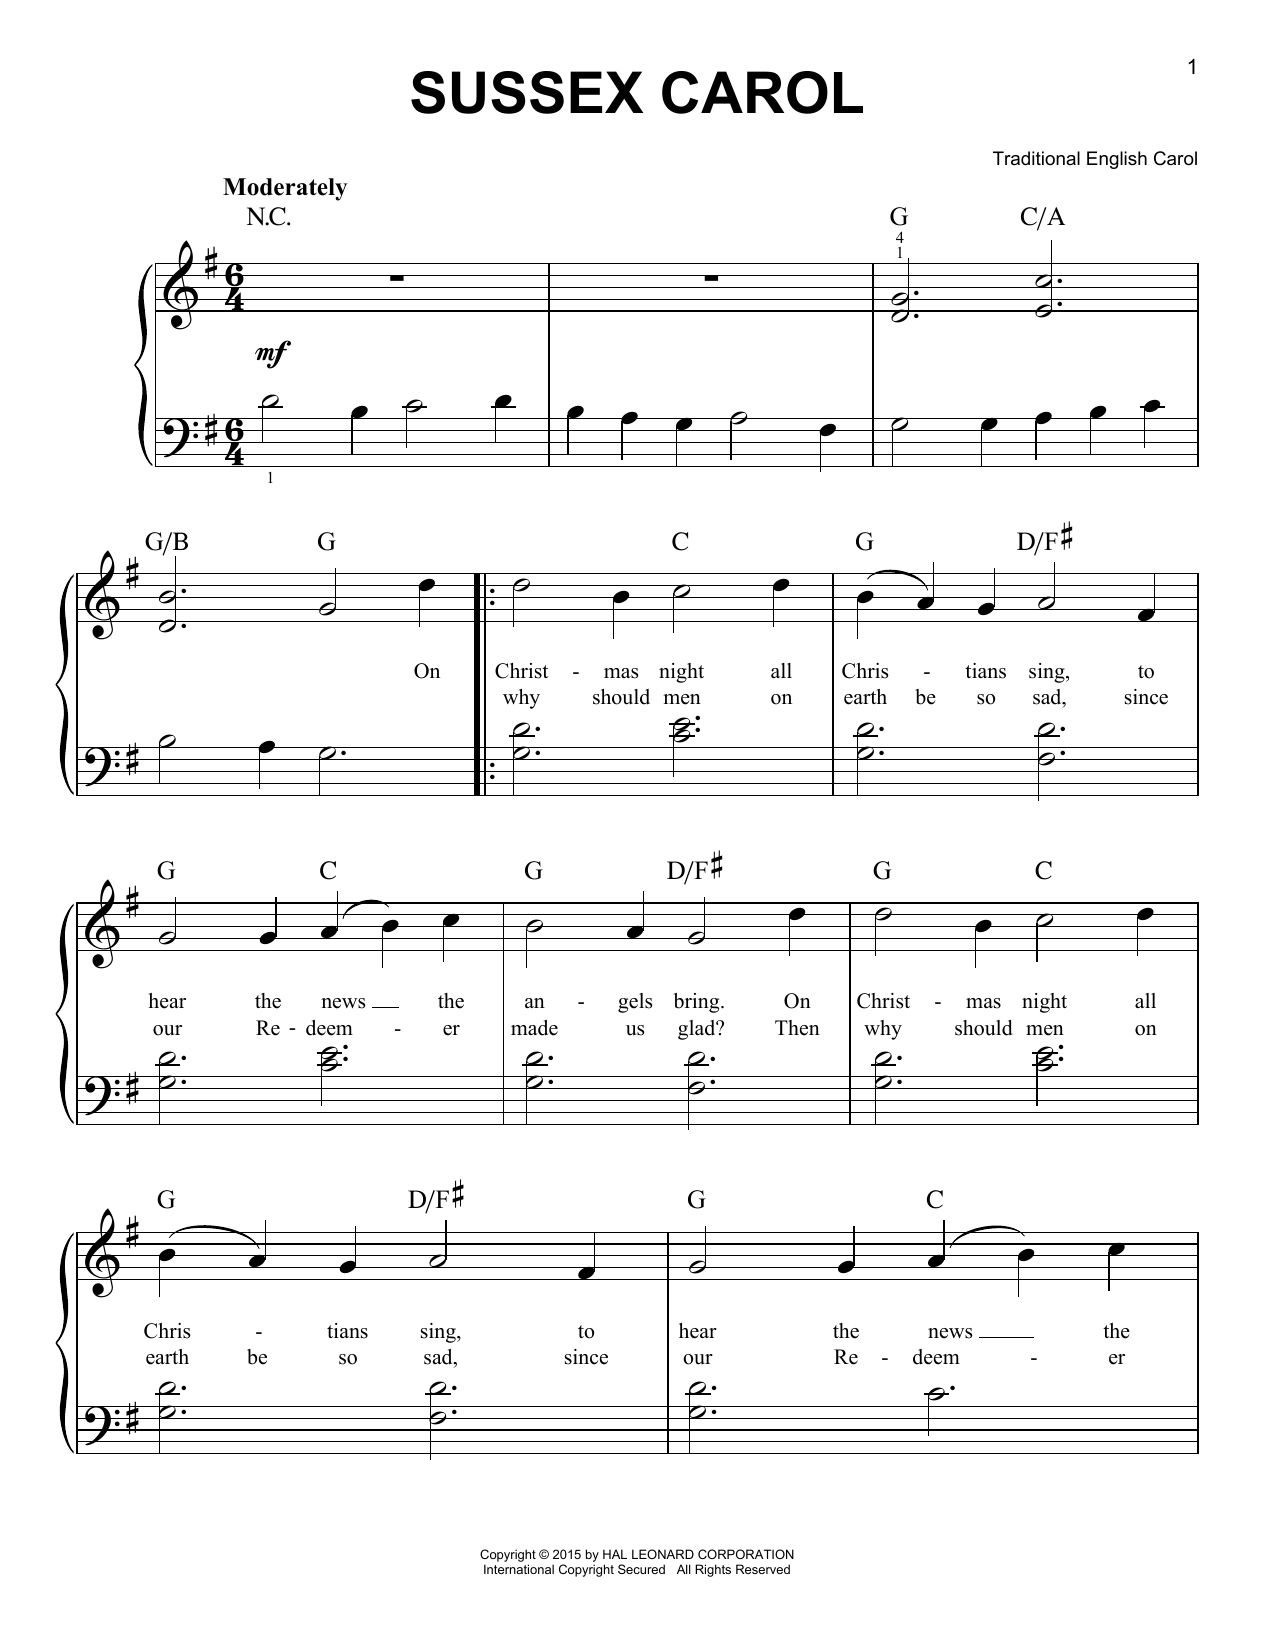 Christmas Carol Sussex Carol sheet music notes and chords arranged for Guitar Chords/Lyrics